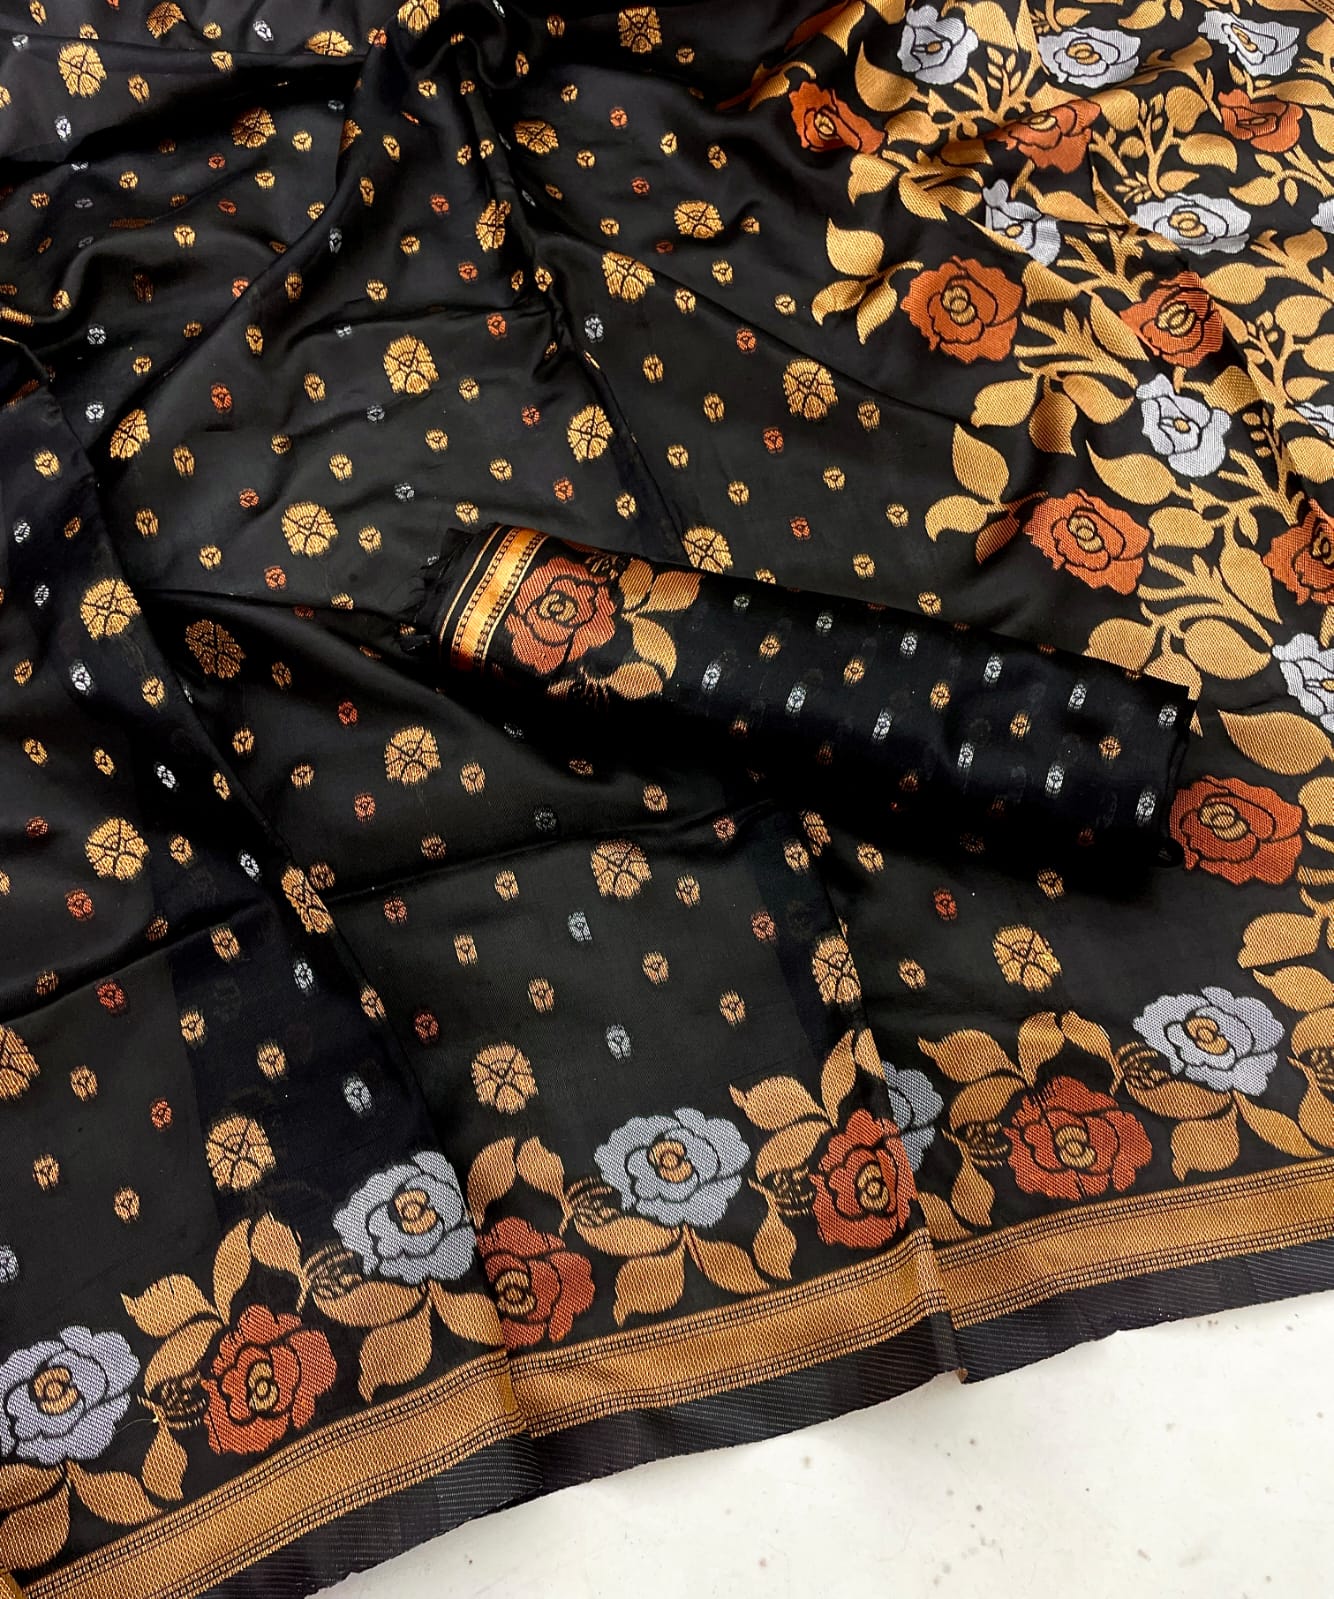 Attractive Kanjivaram Banarasi Silk Black Color Saree